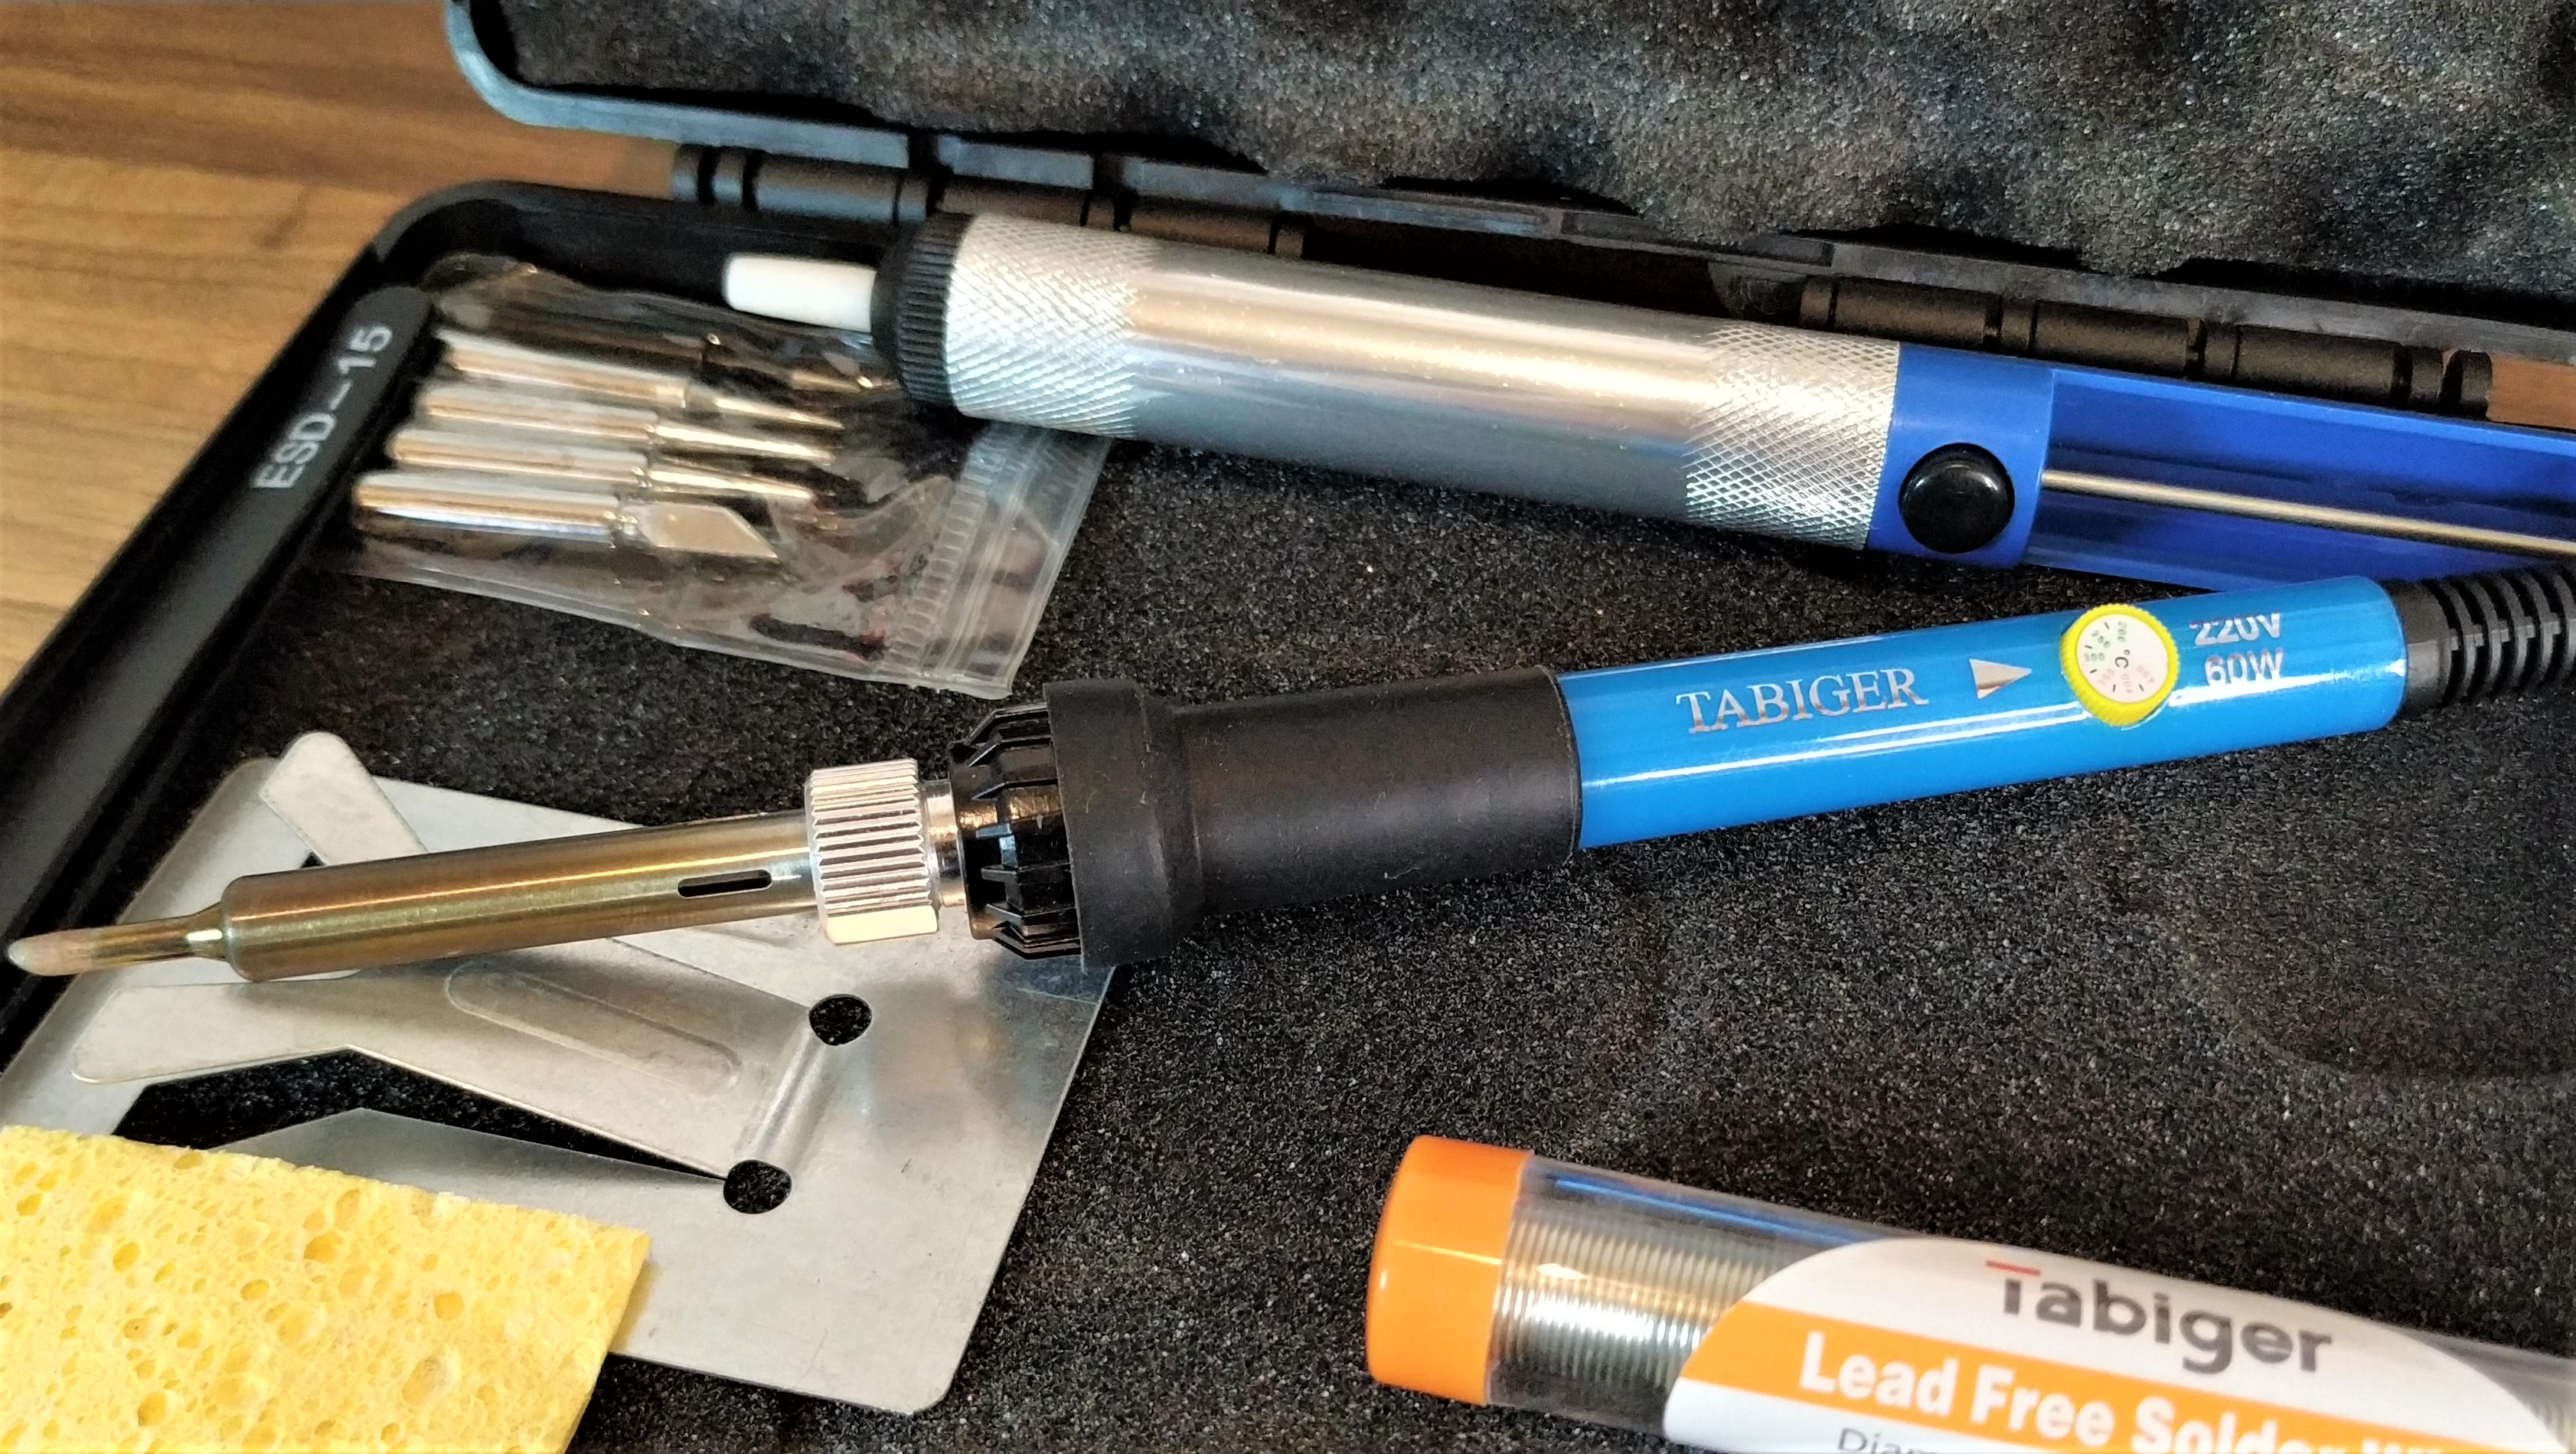 Tabiger soldering iron kit